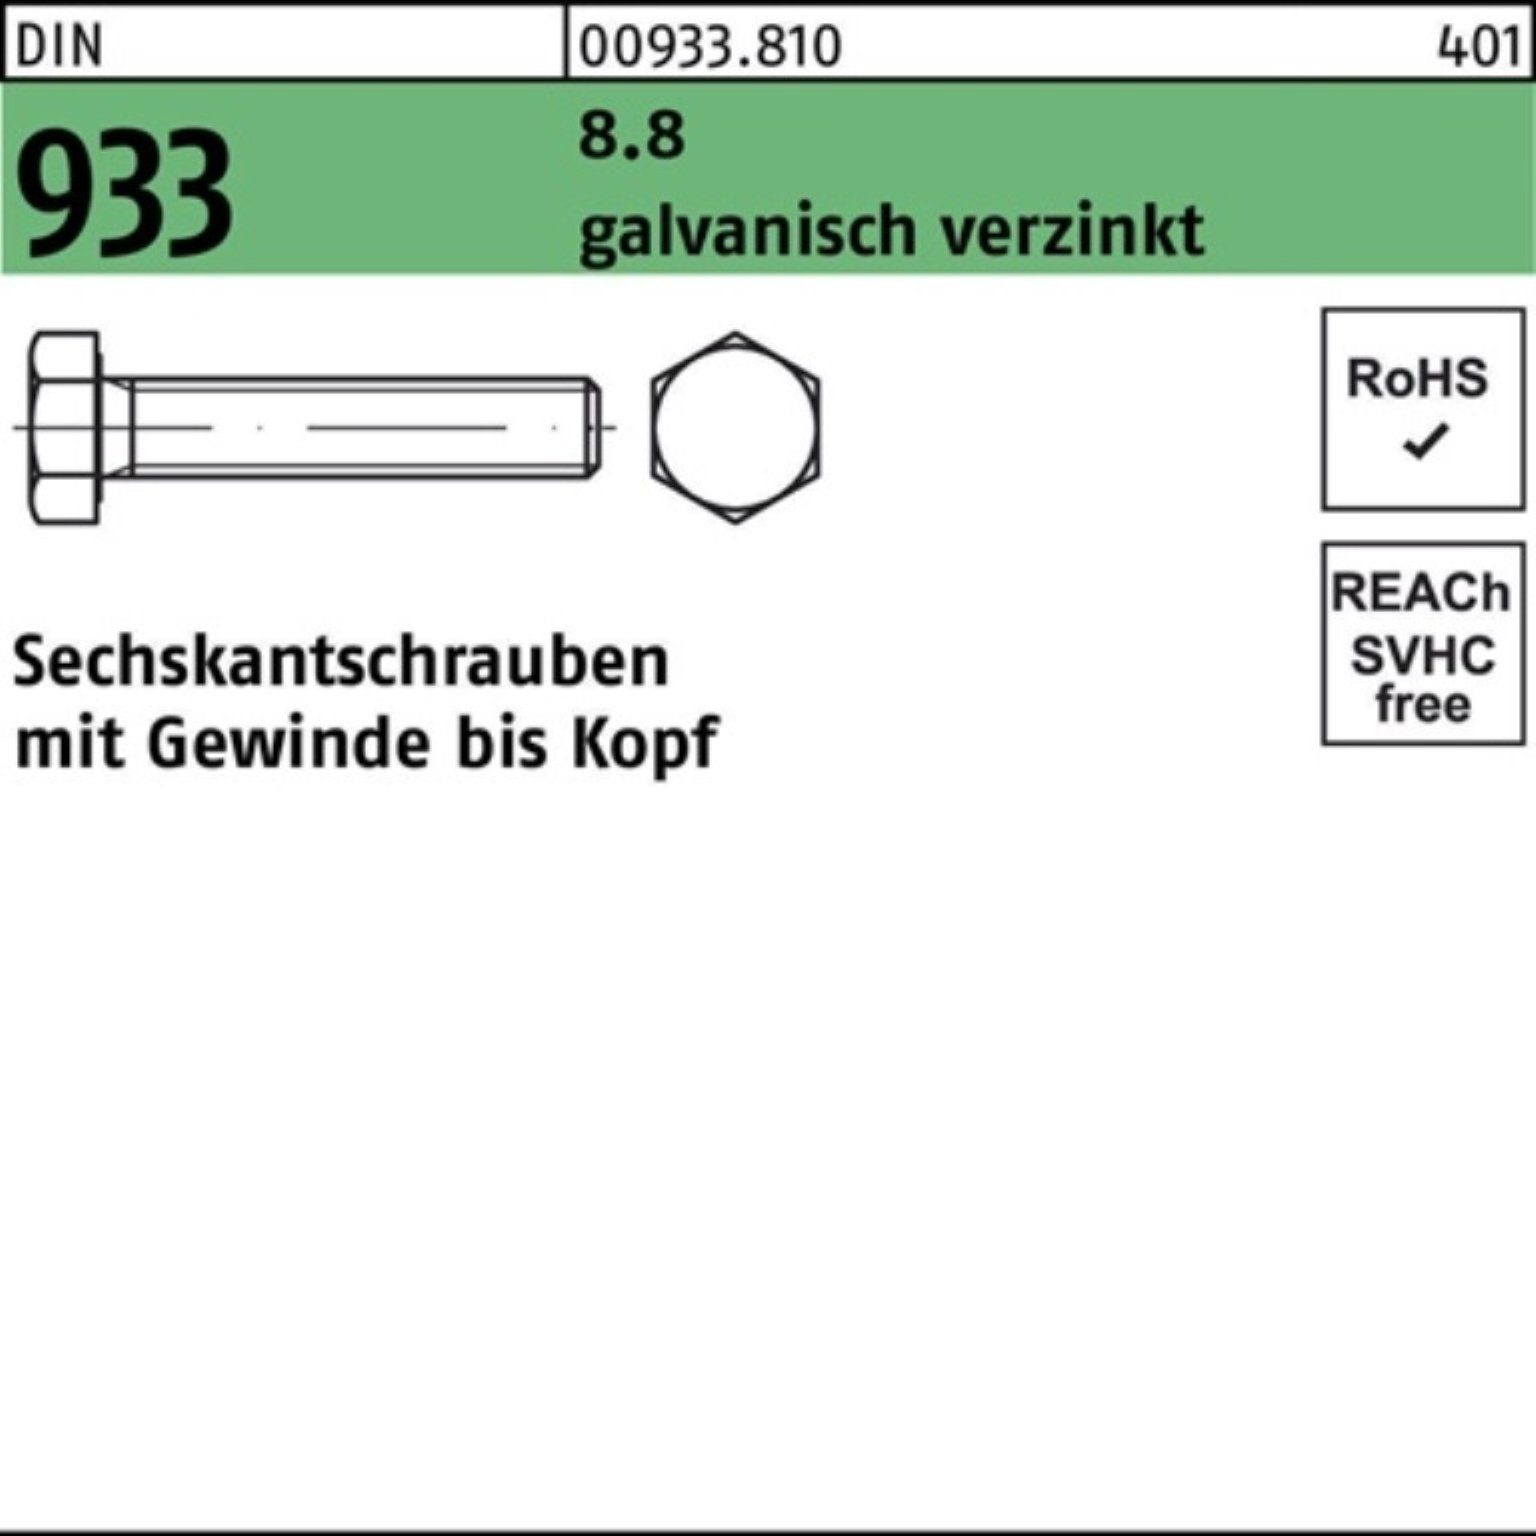 Reyher Sechskantschraube 100er Pack DIN VG M30x 933 Stü 120 8.8 galv.verz. 1 Sechskantschraube